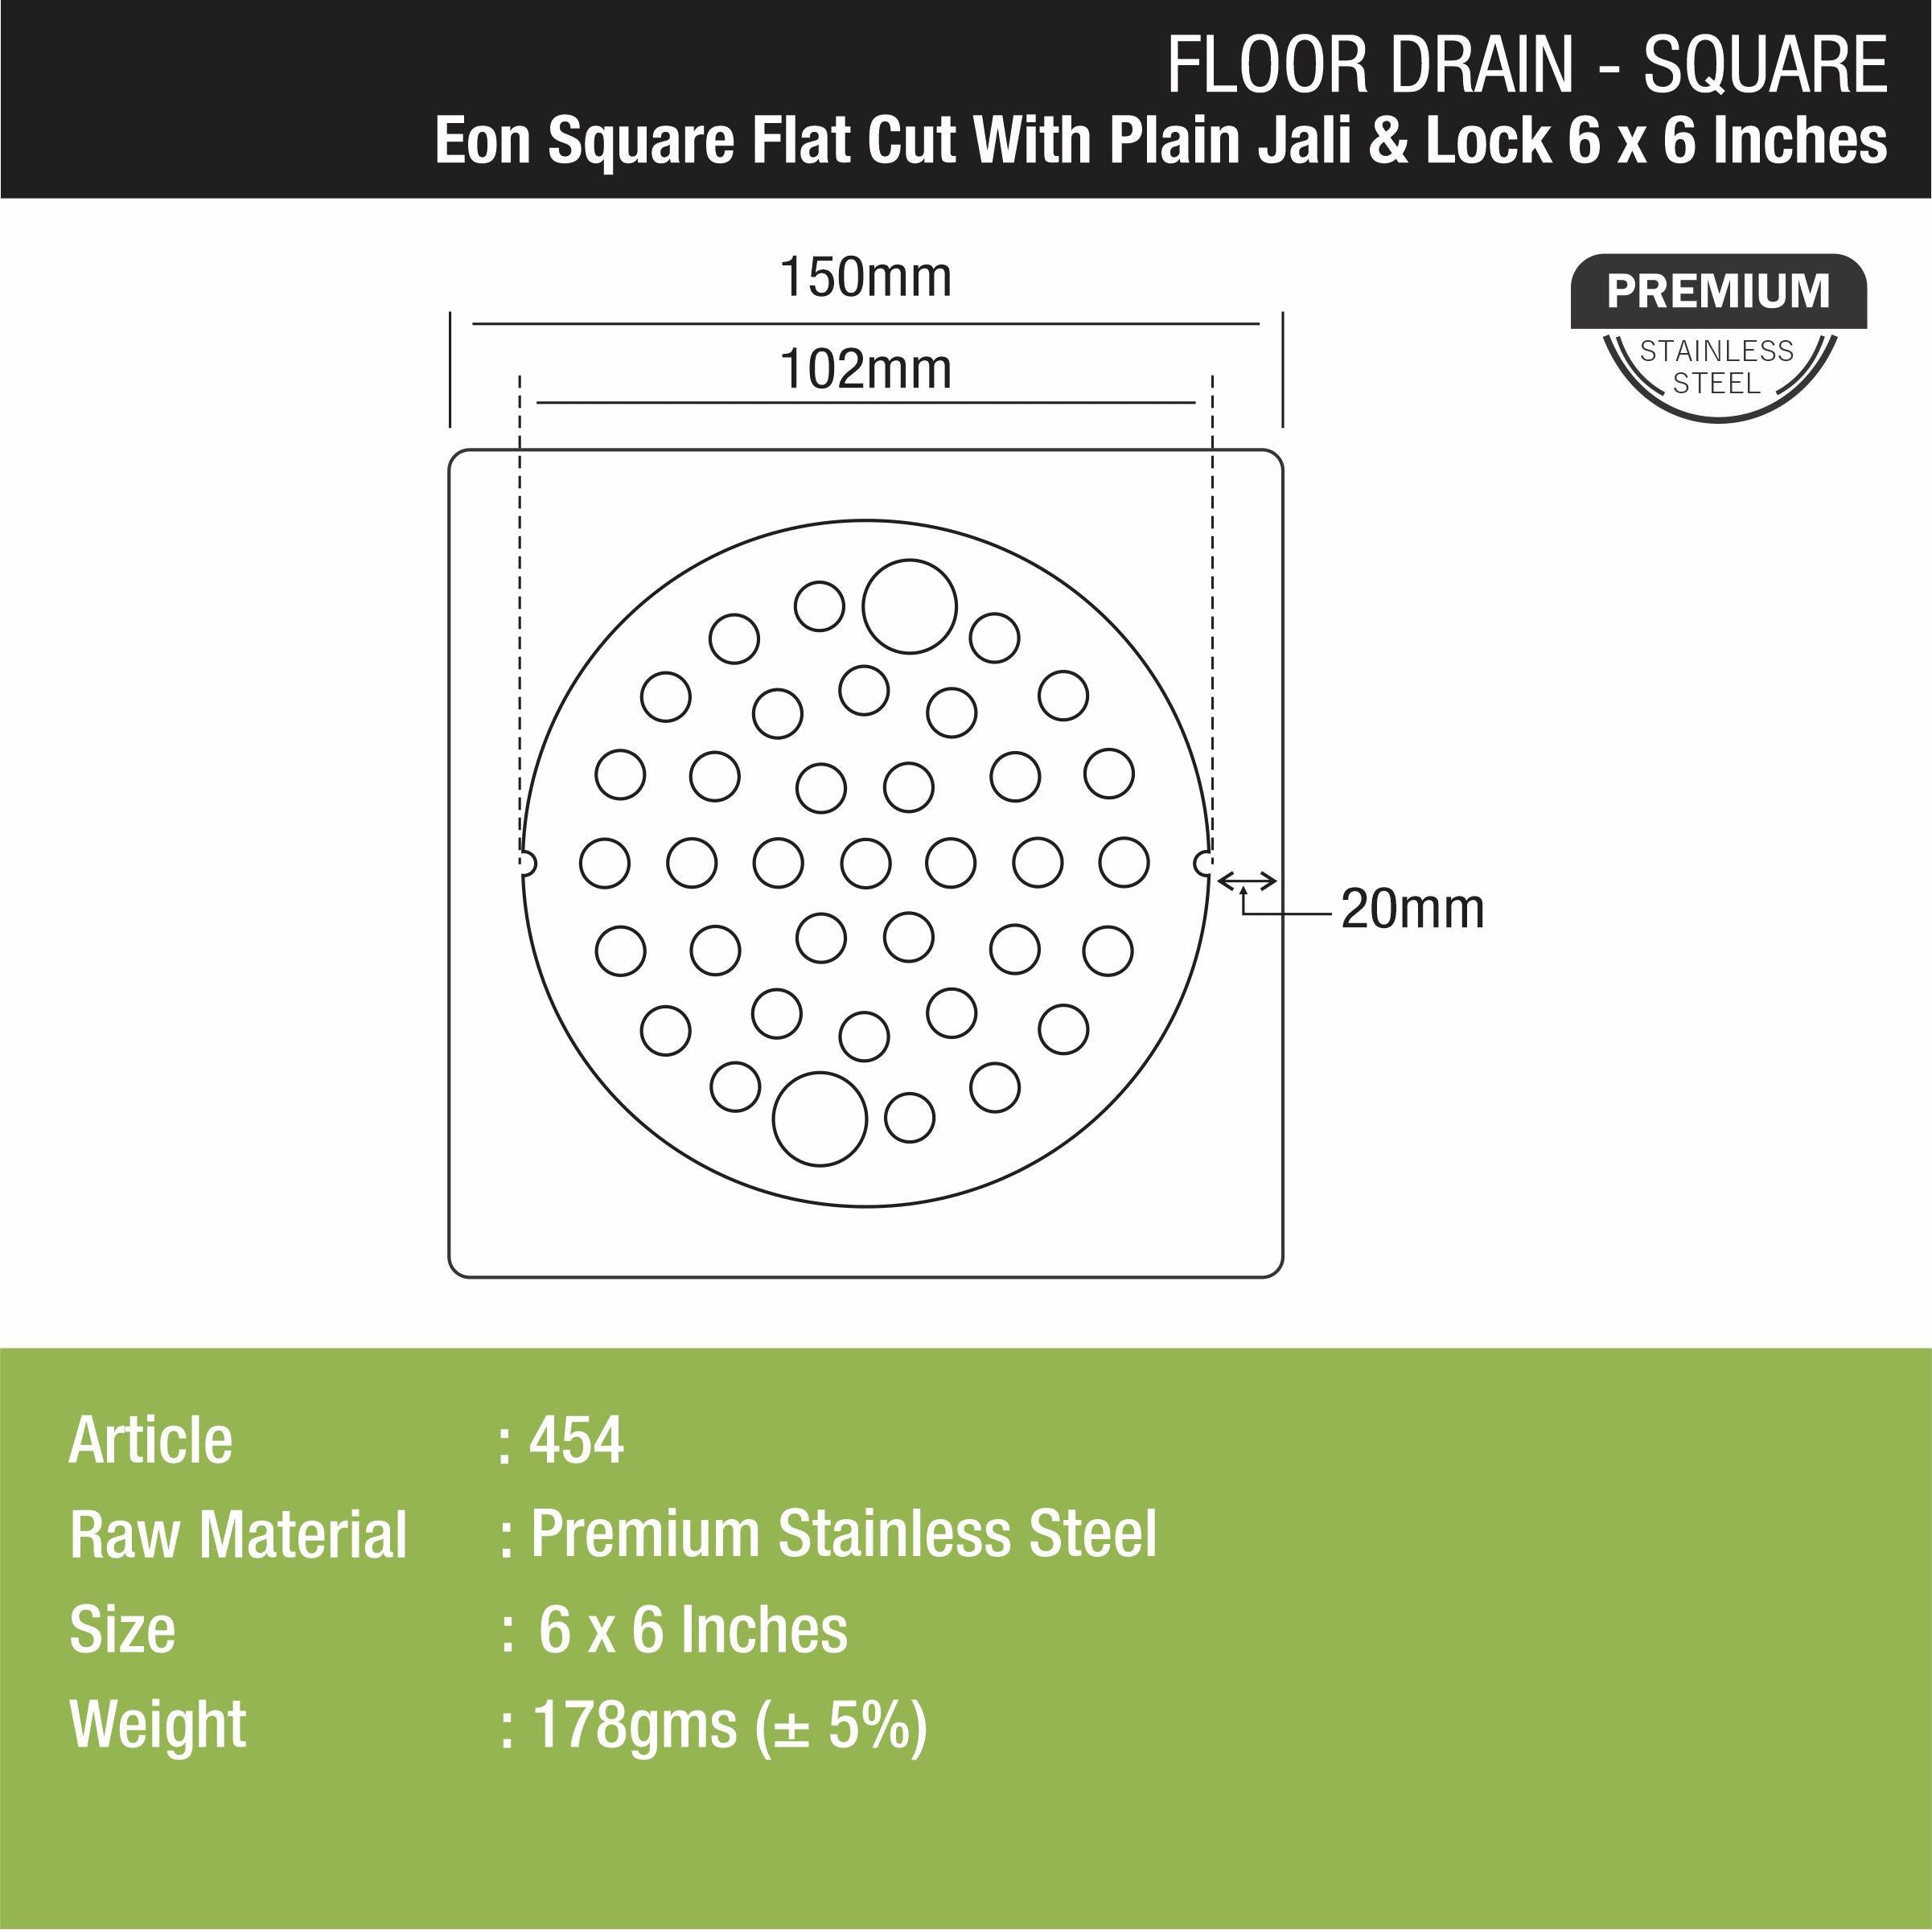 Eon Square Flat Cut Floor Drain with Plain Jali and Lock (6 x 6 Inches) - LIPKA - Lipka Home